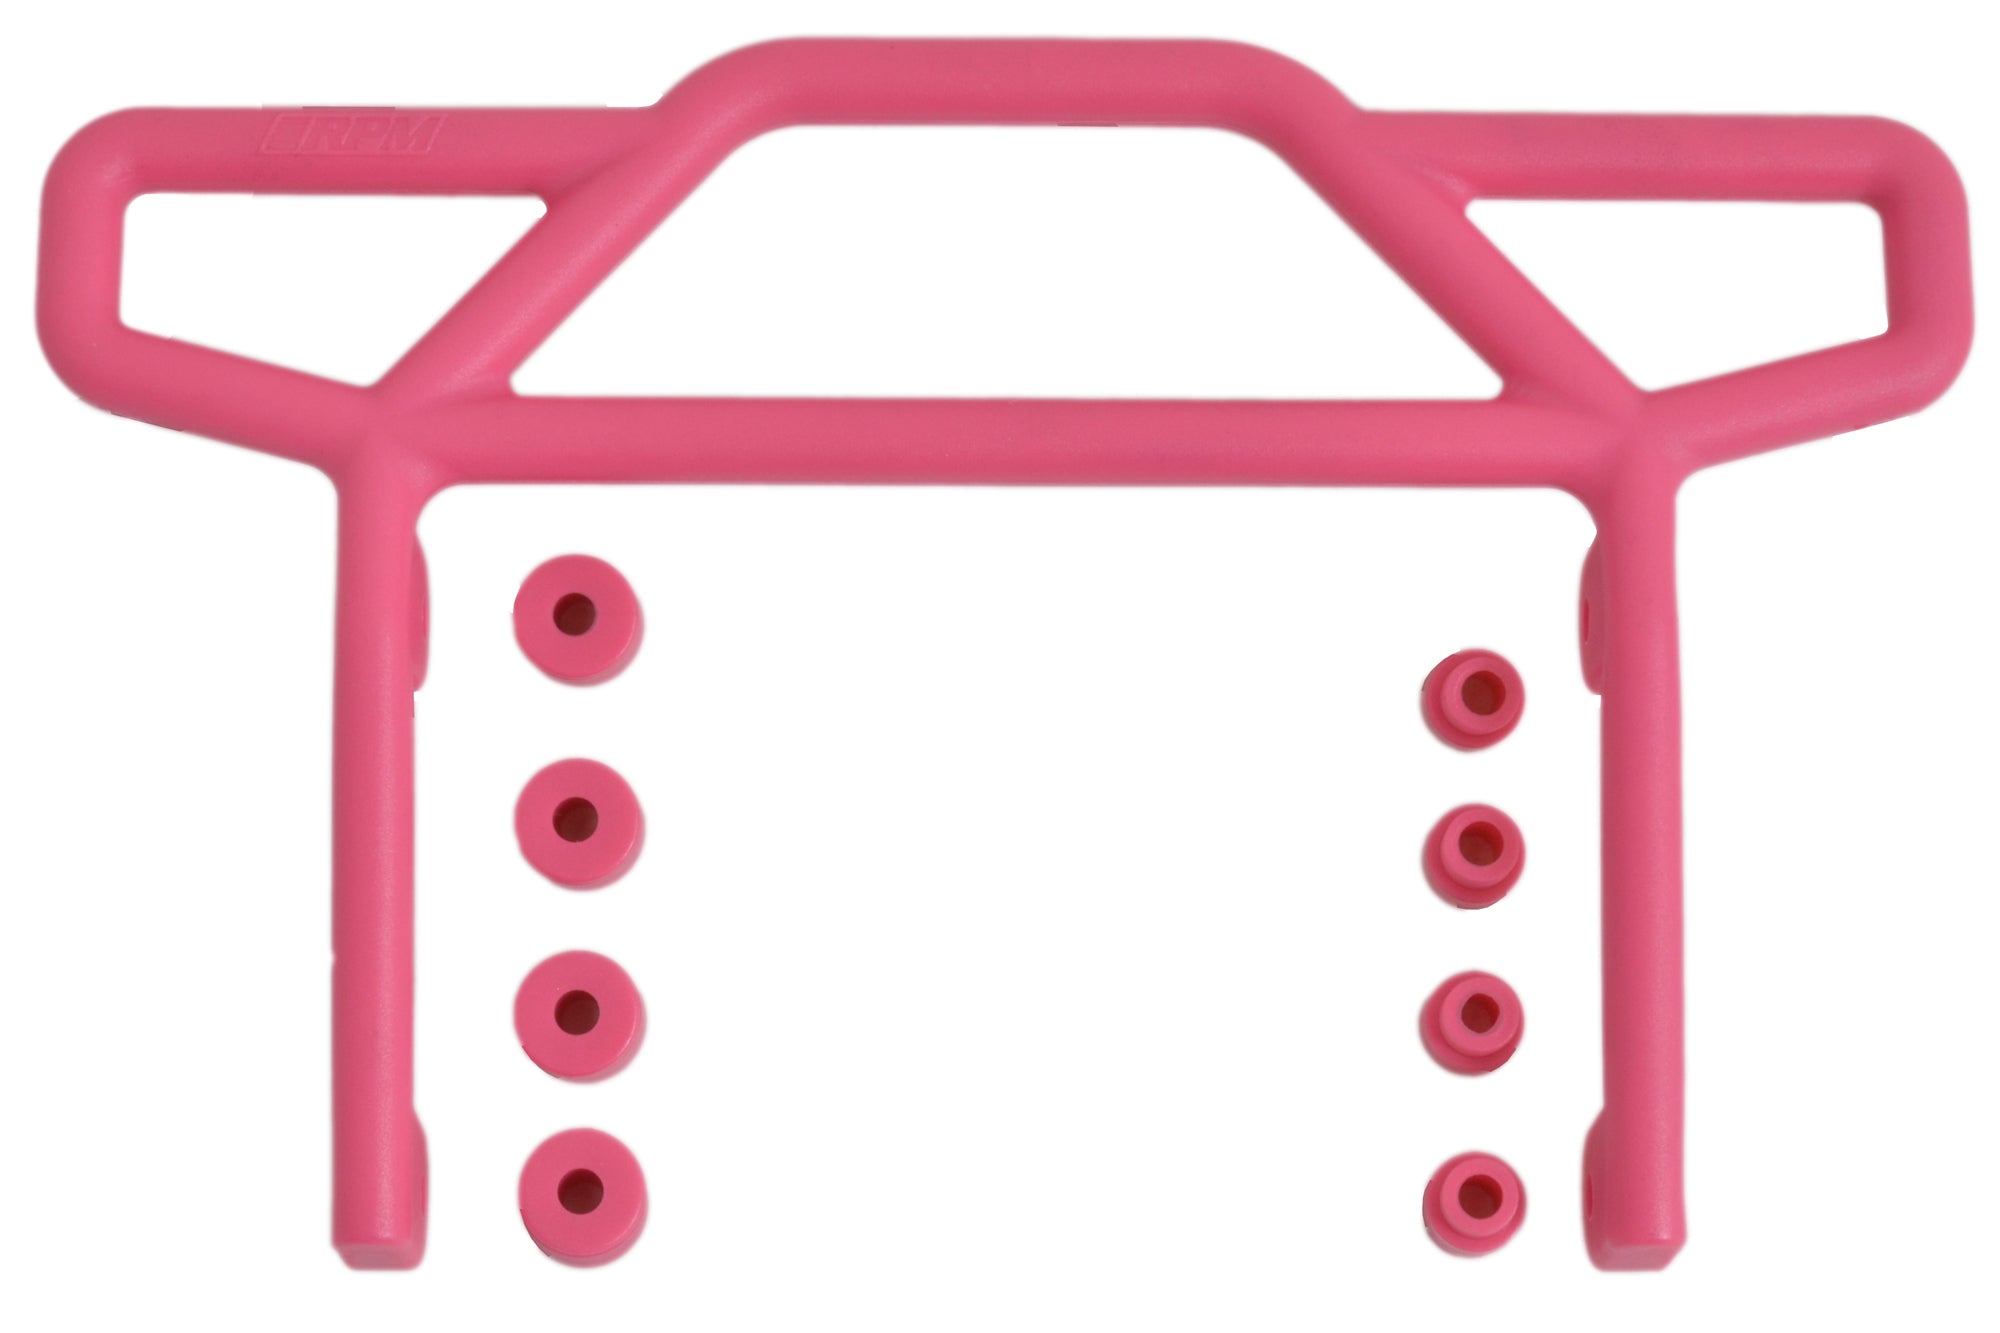 RPM 70817 Rear Bumper, Pink, for Traxxas Electric Rustler